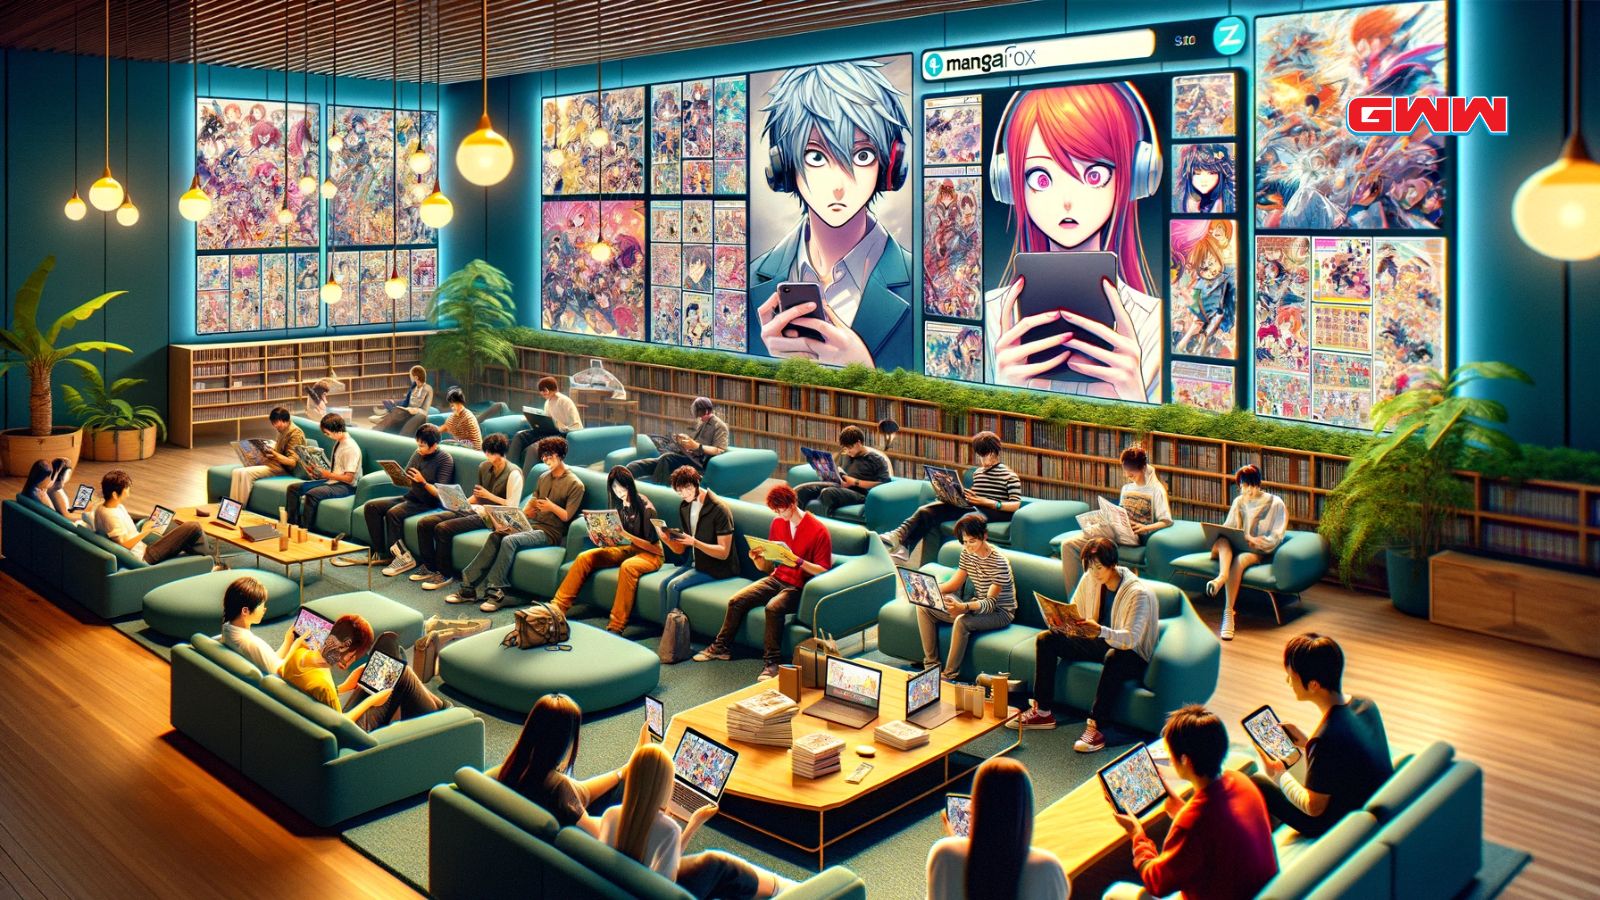 People reading manga on MangaFox through various devices